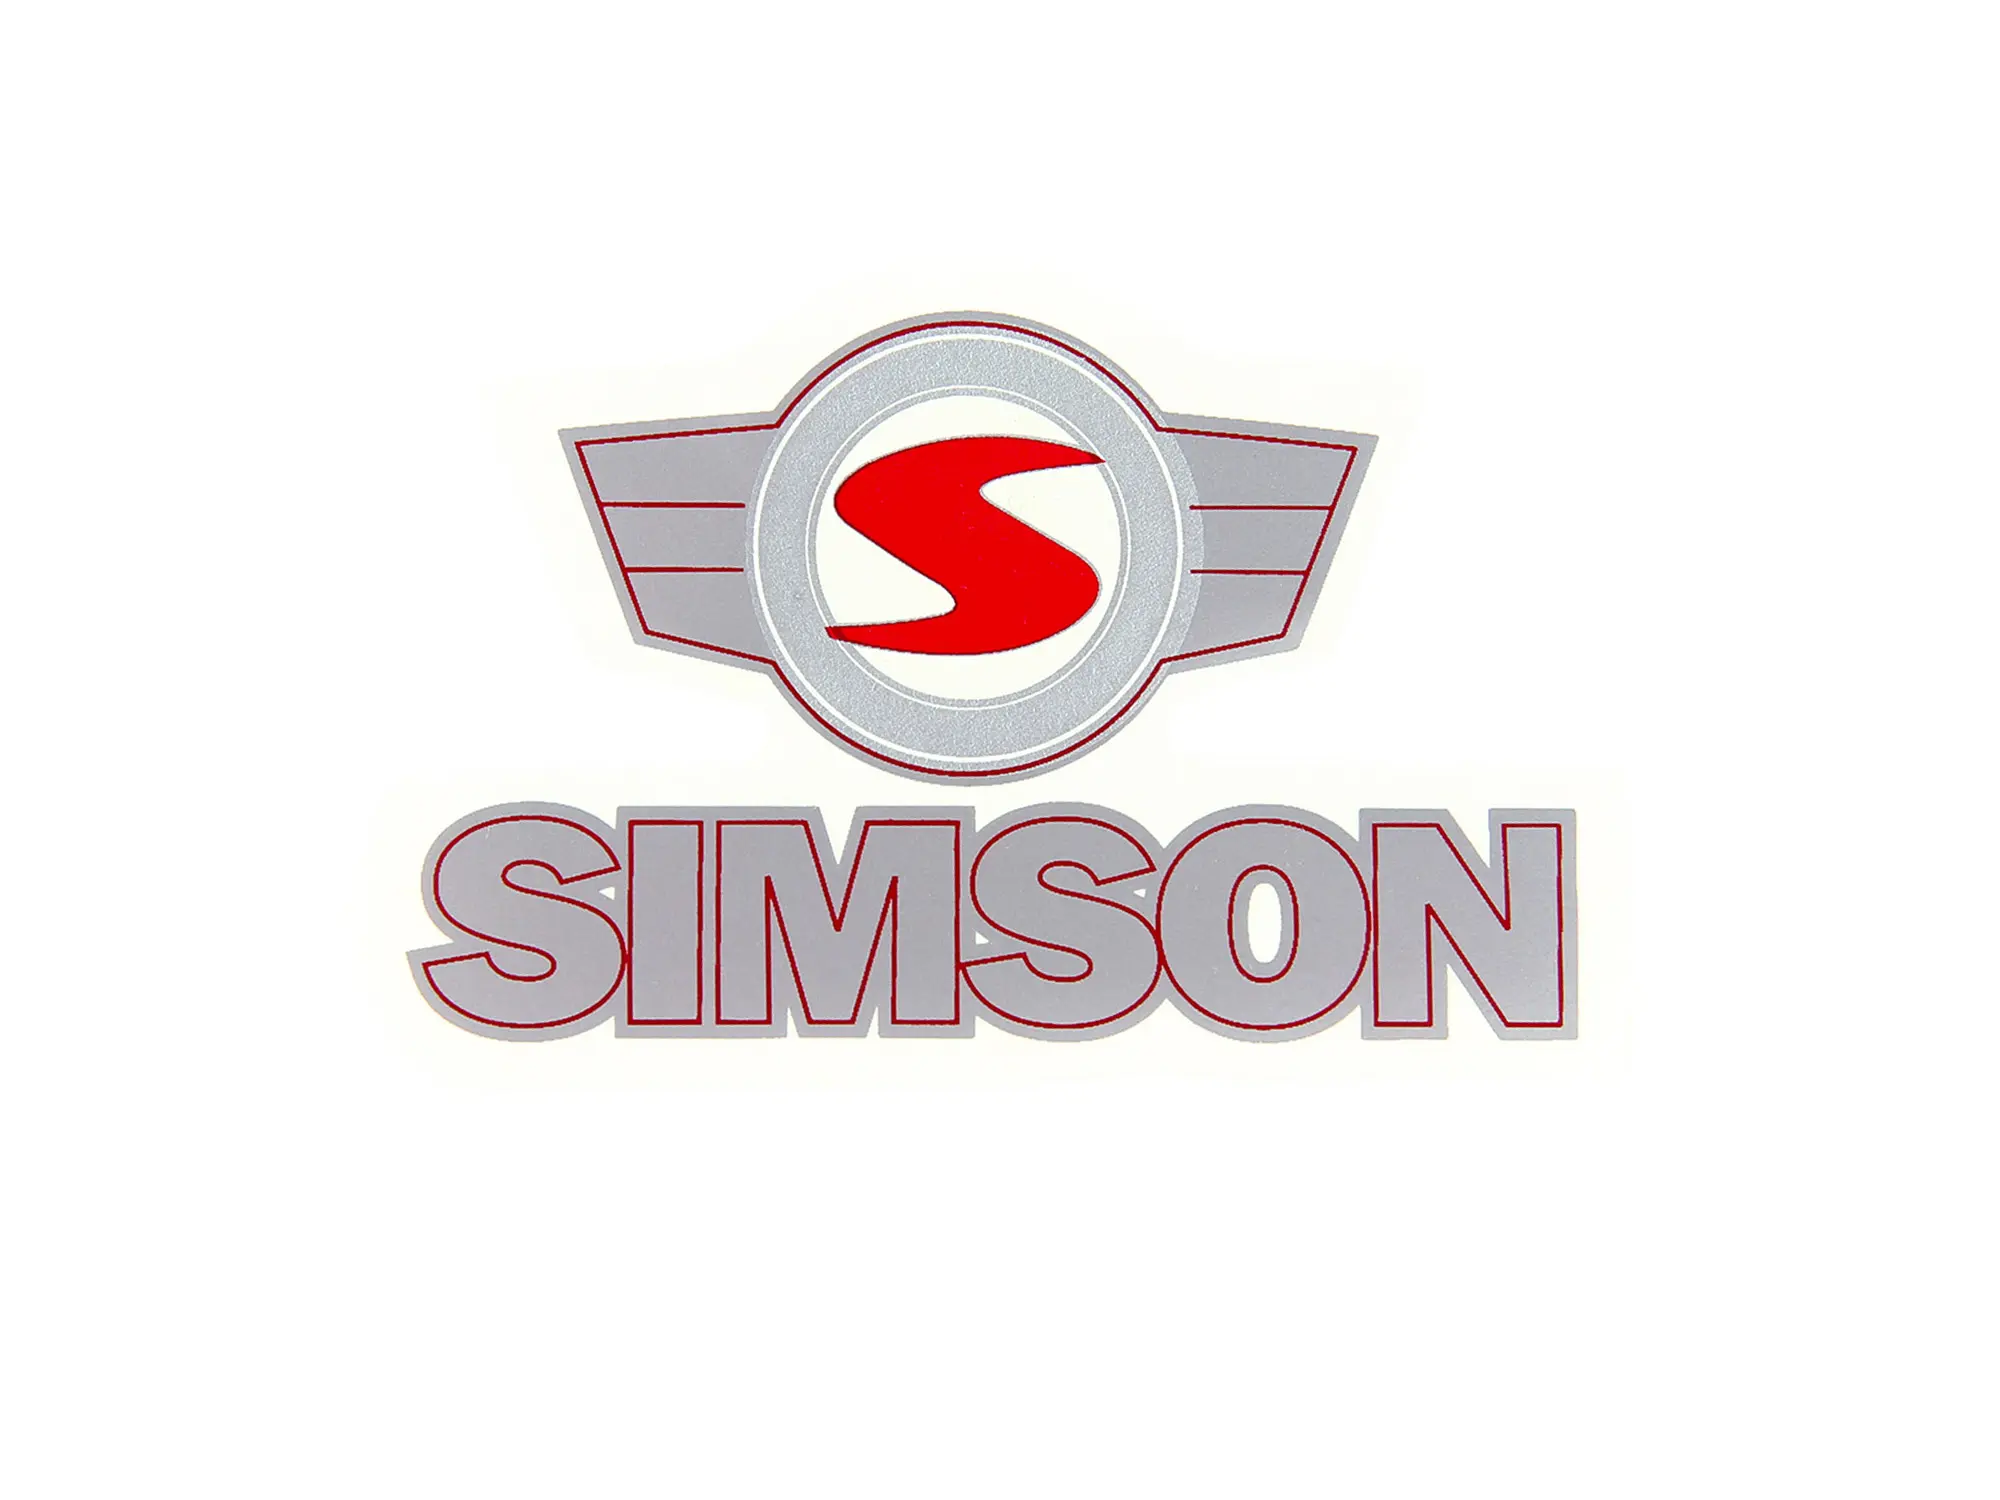 Klebefolie - "SIMSON" - Schriftzug - und Emblem in Rot/Silber, Art.-Nr.: 10002956 - Bild 1